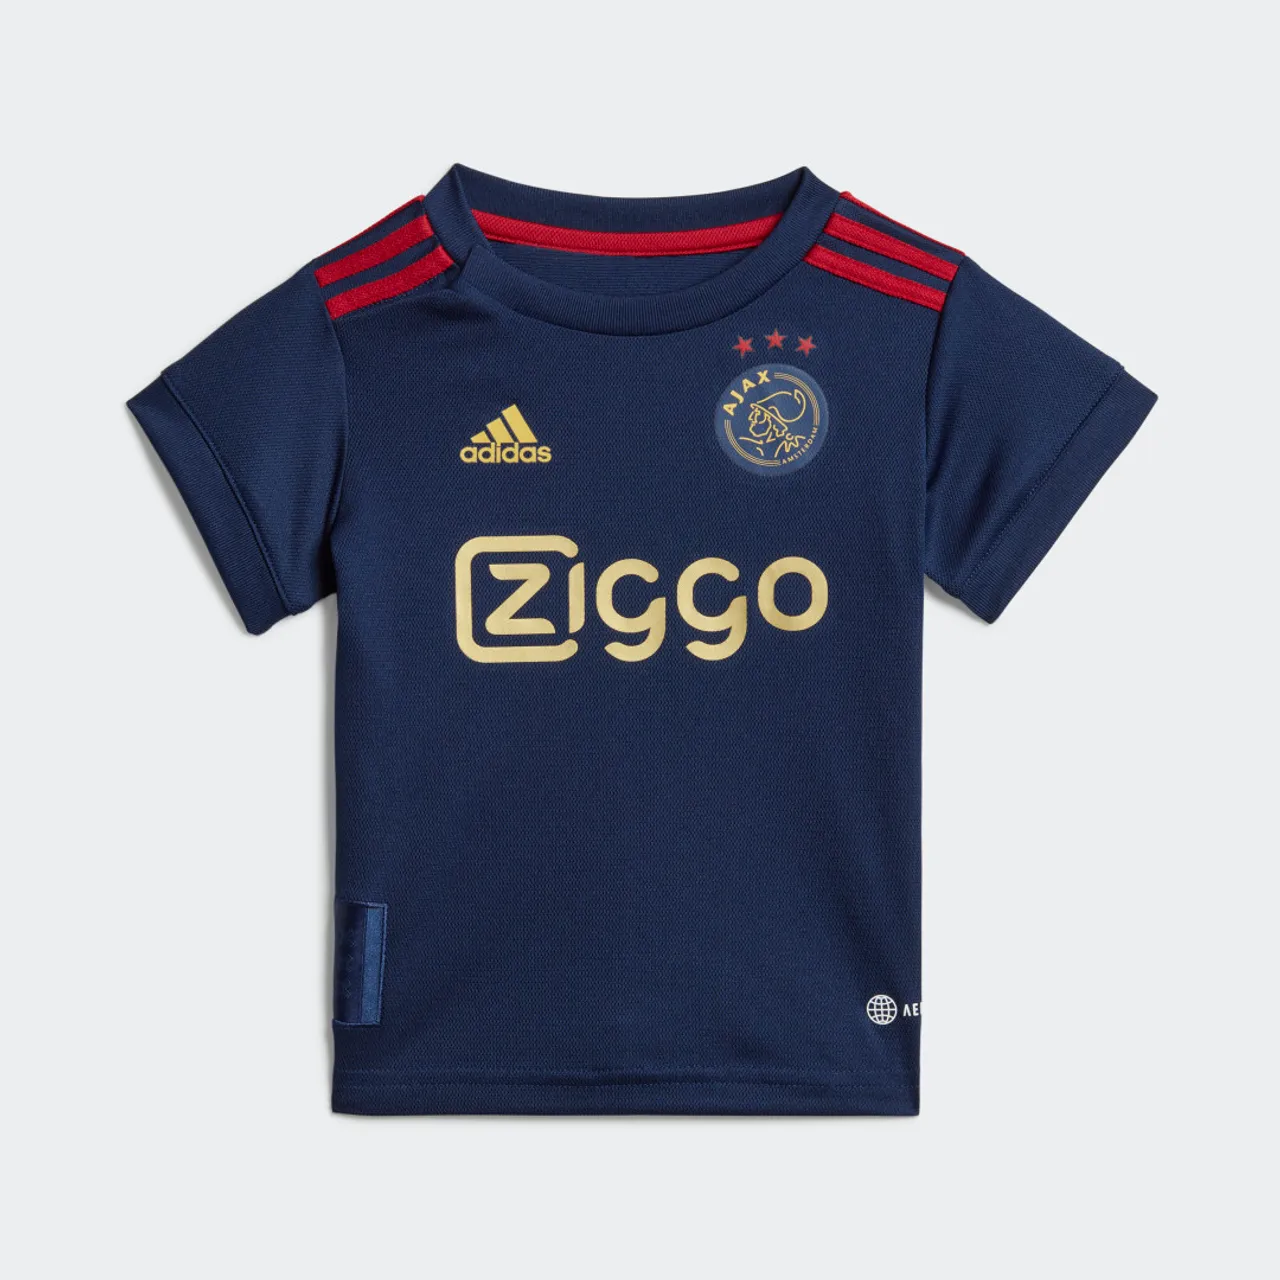 Ajax Amsterdam 22/23 Away Baby Kit